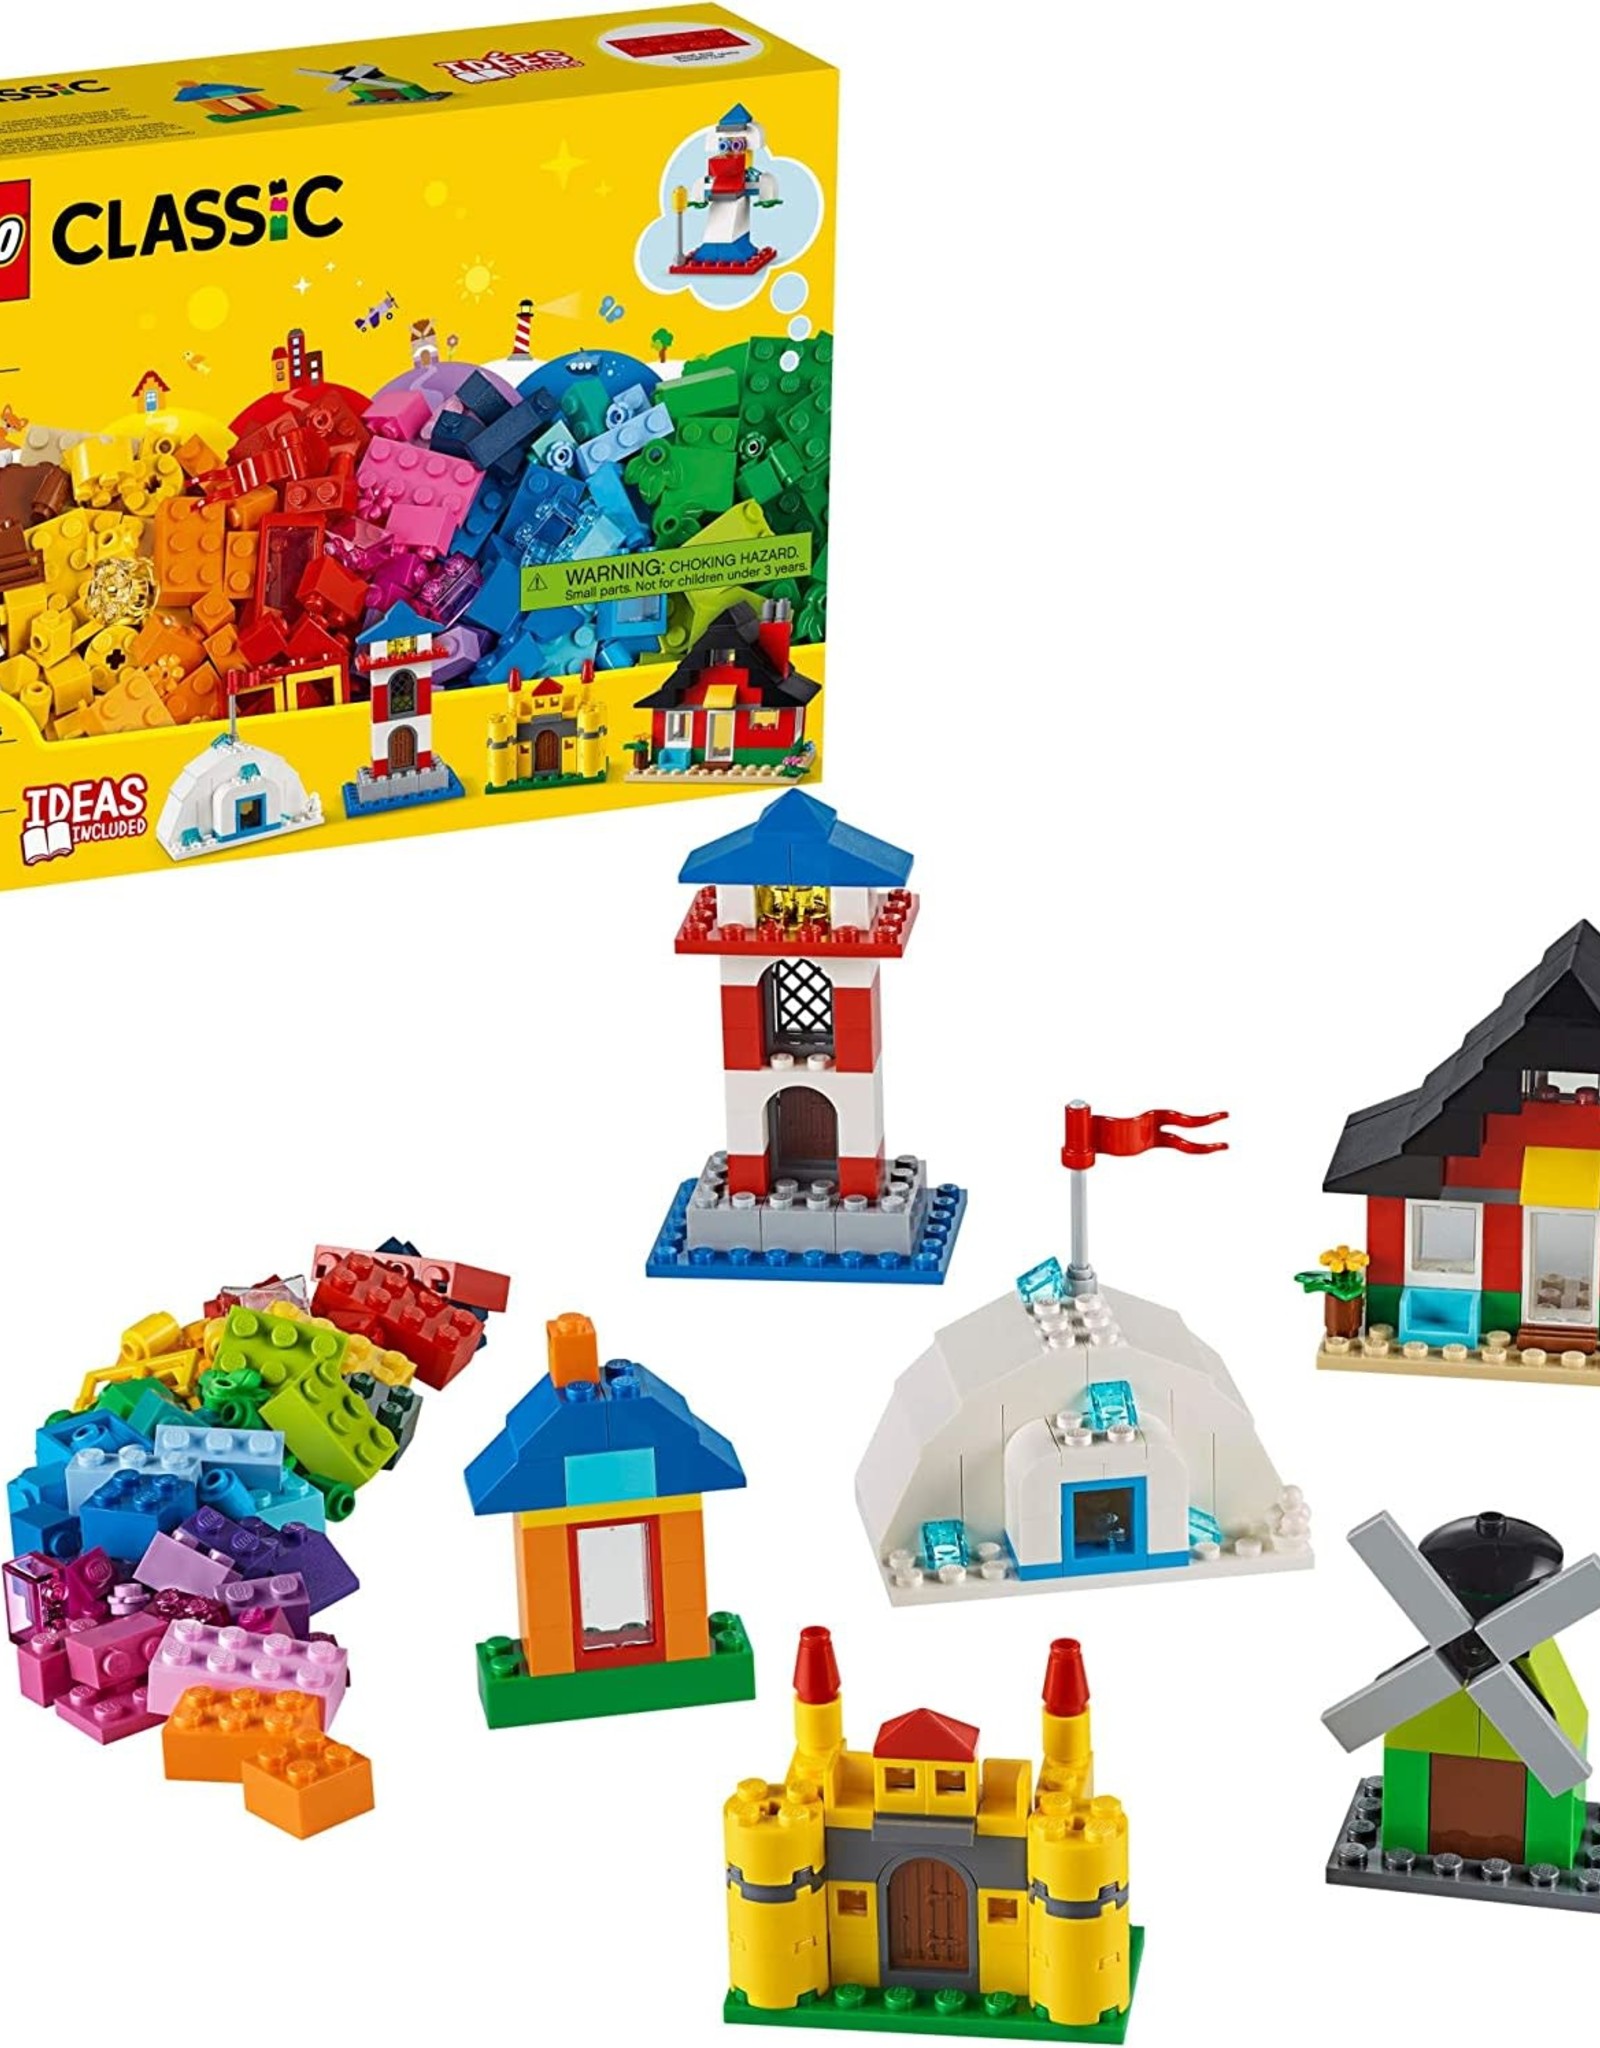 LEGO Lego Creator Bricks and Houses